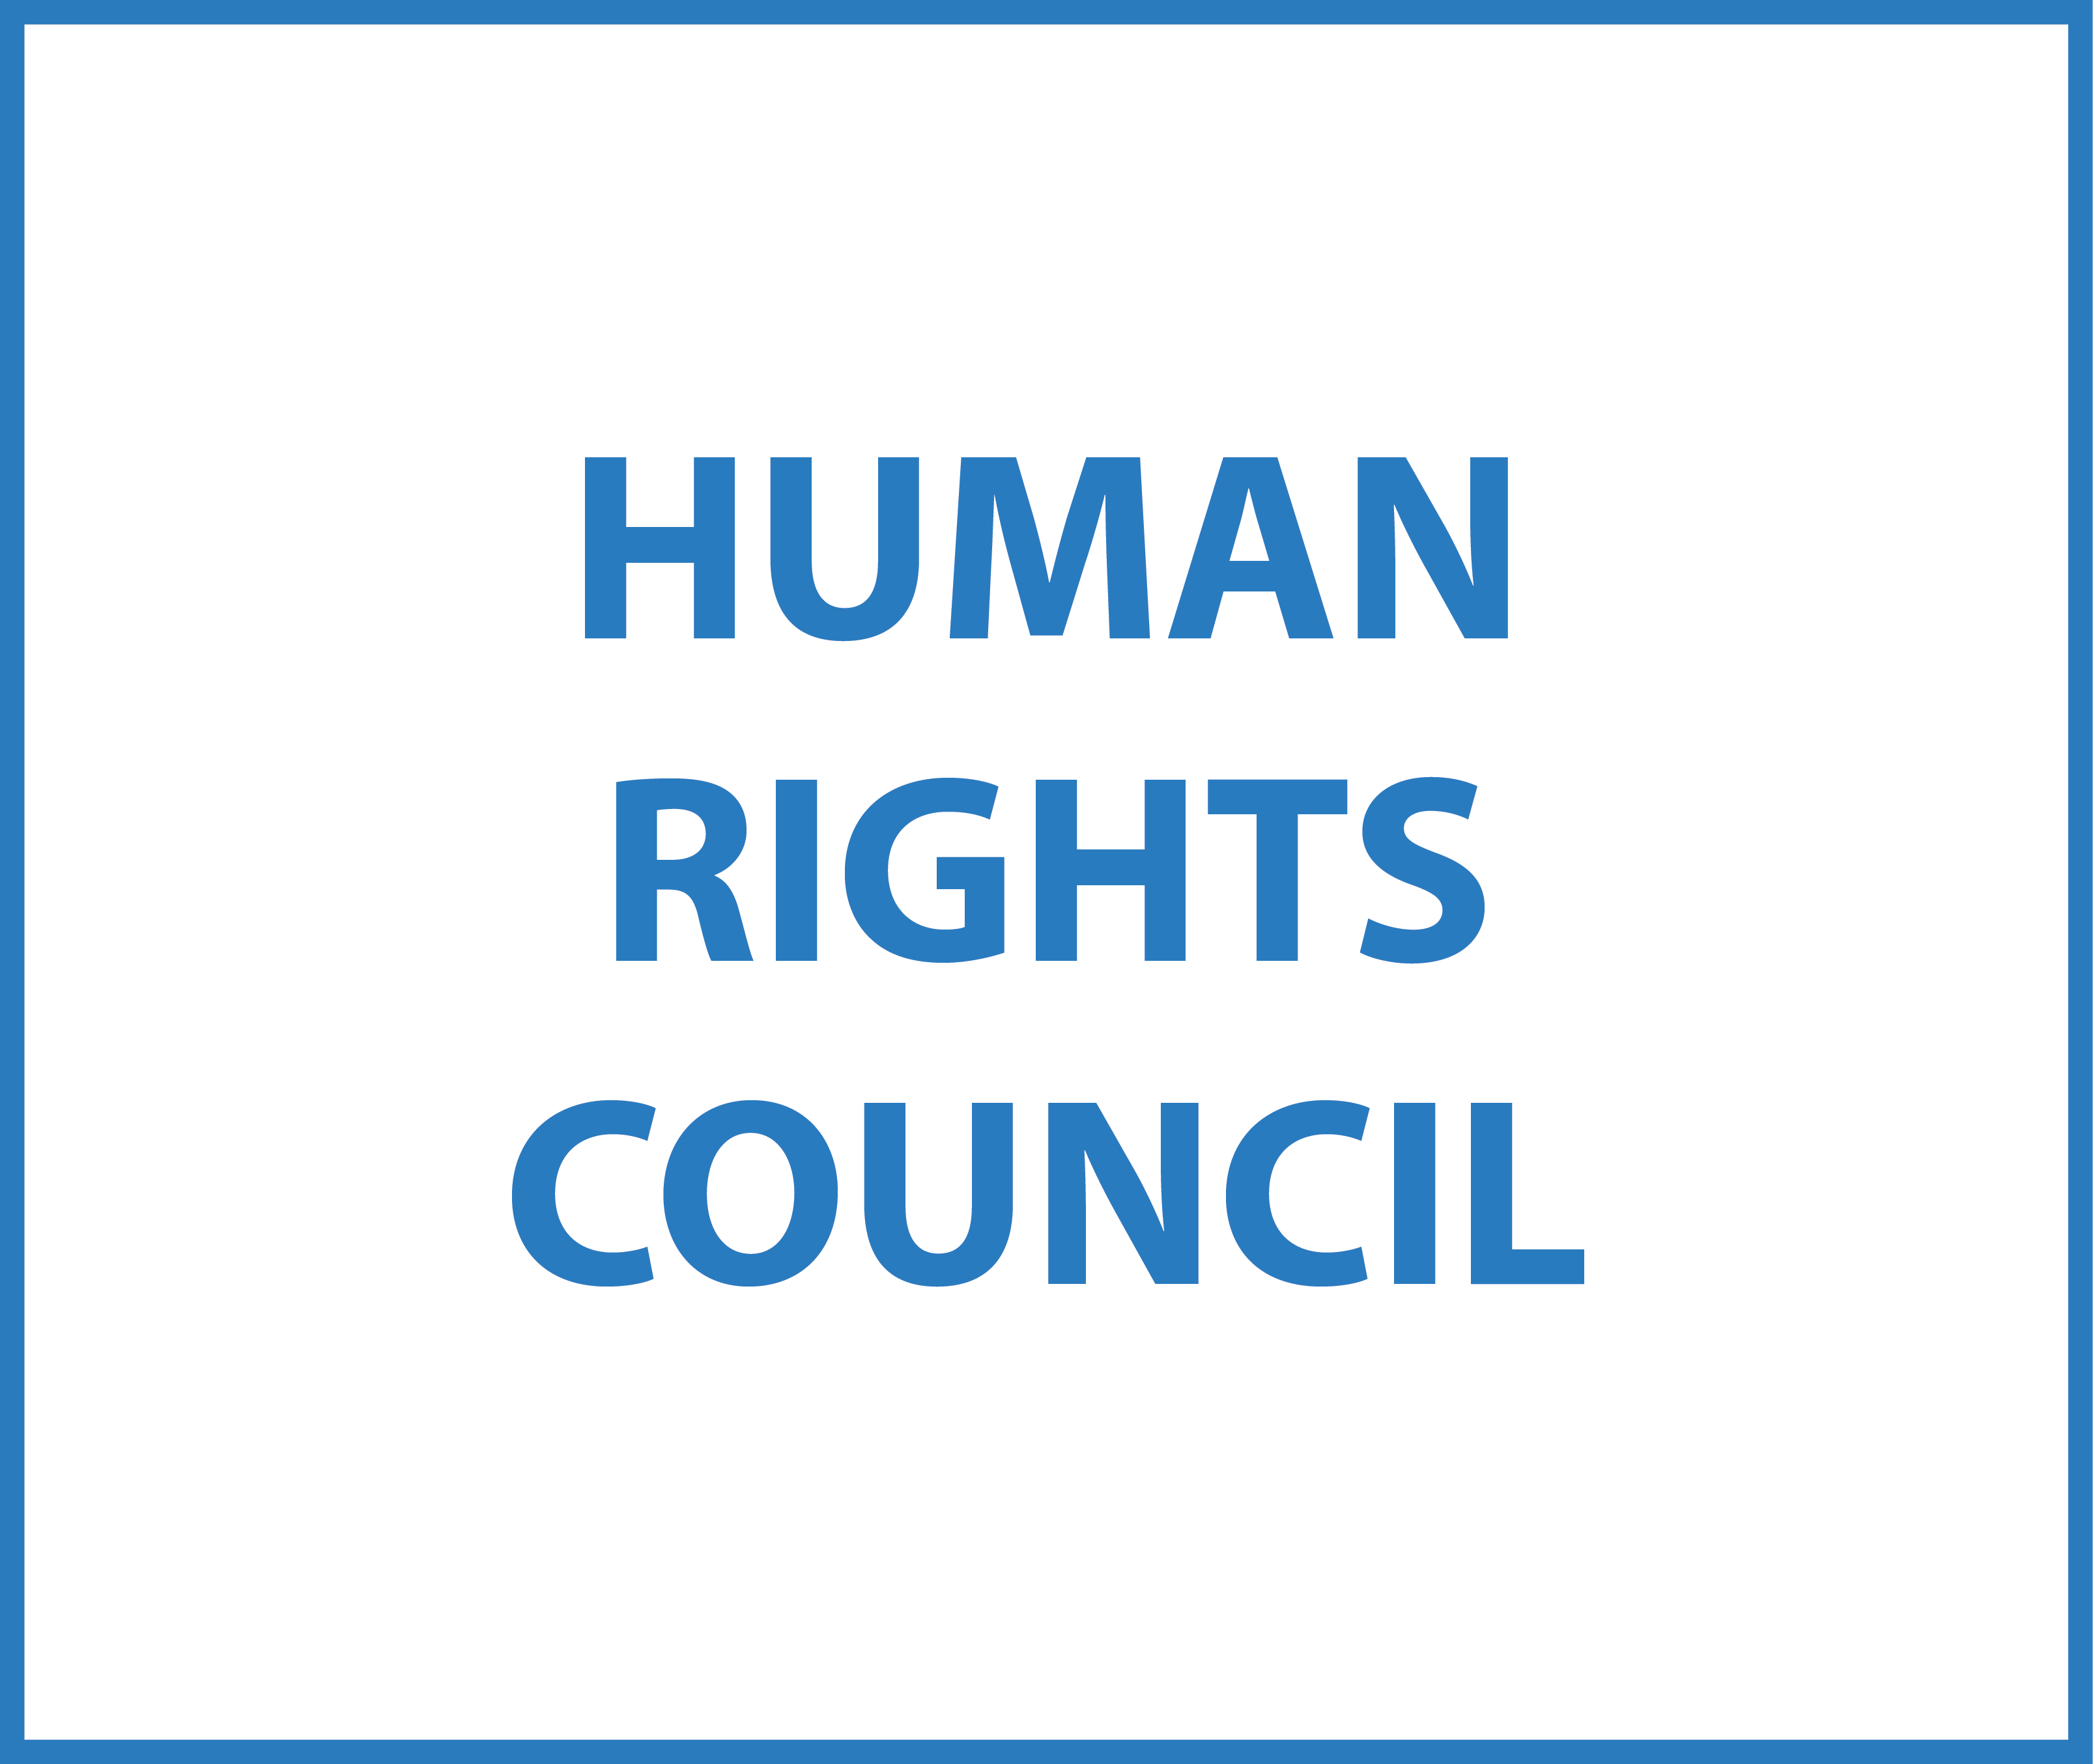 Human rights council